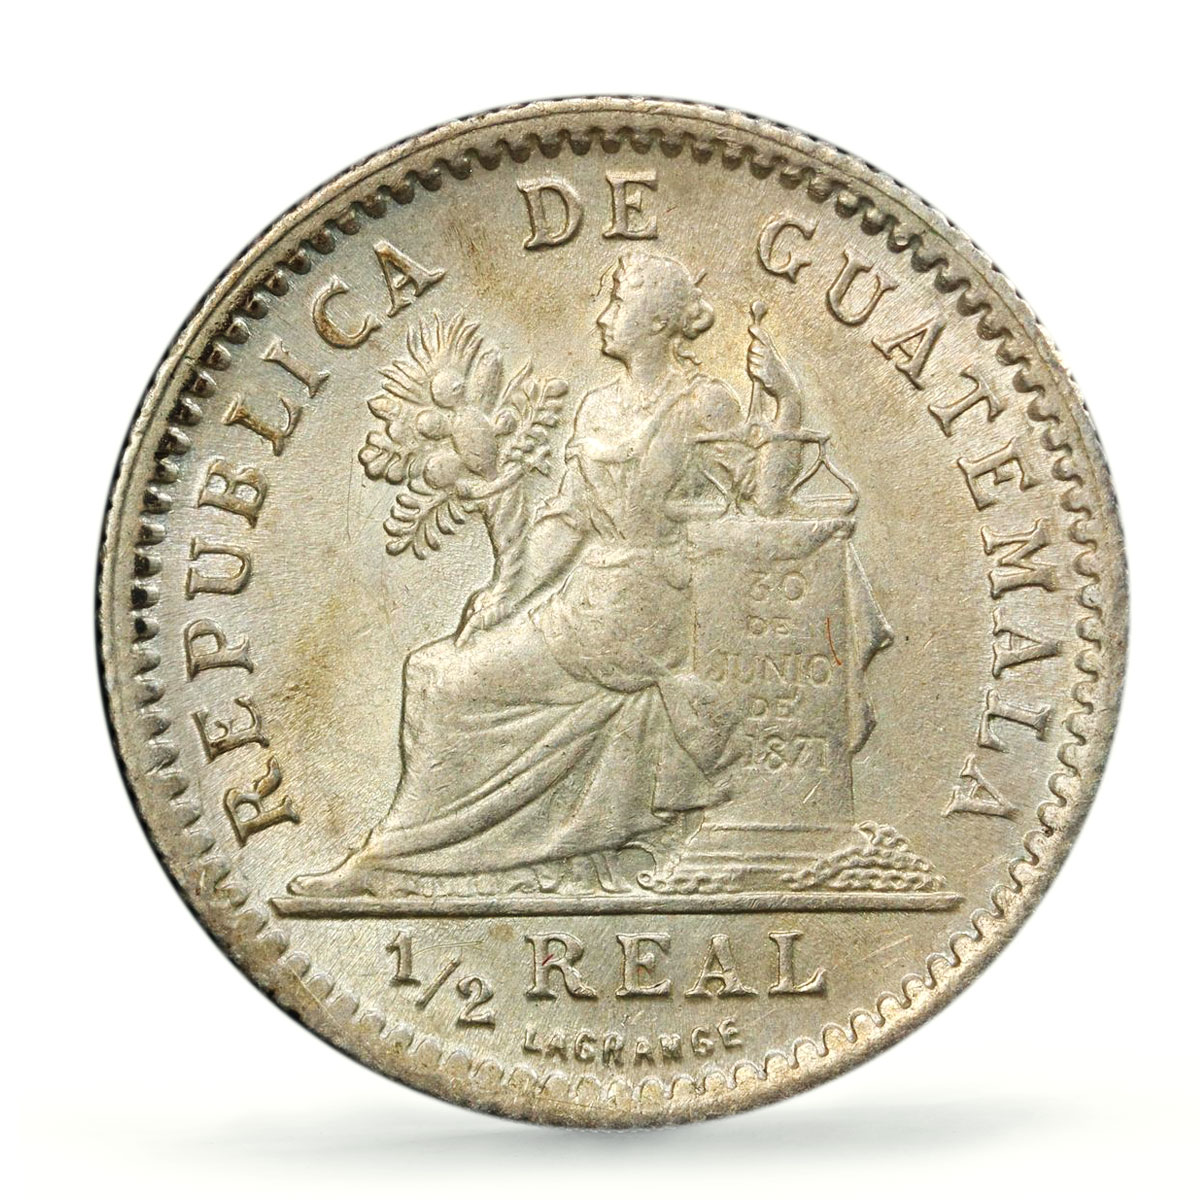 Guatemala 1/2 real Regular Coinage Libertad Liberty MS62 PCGS silver coin 1895